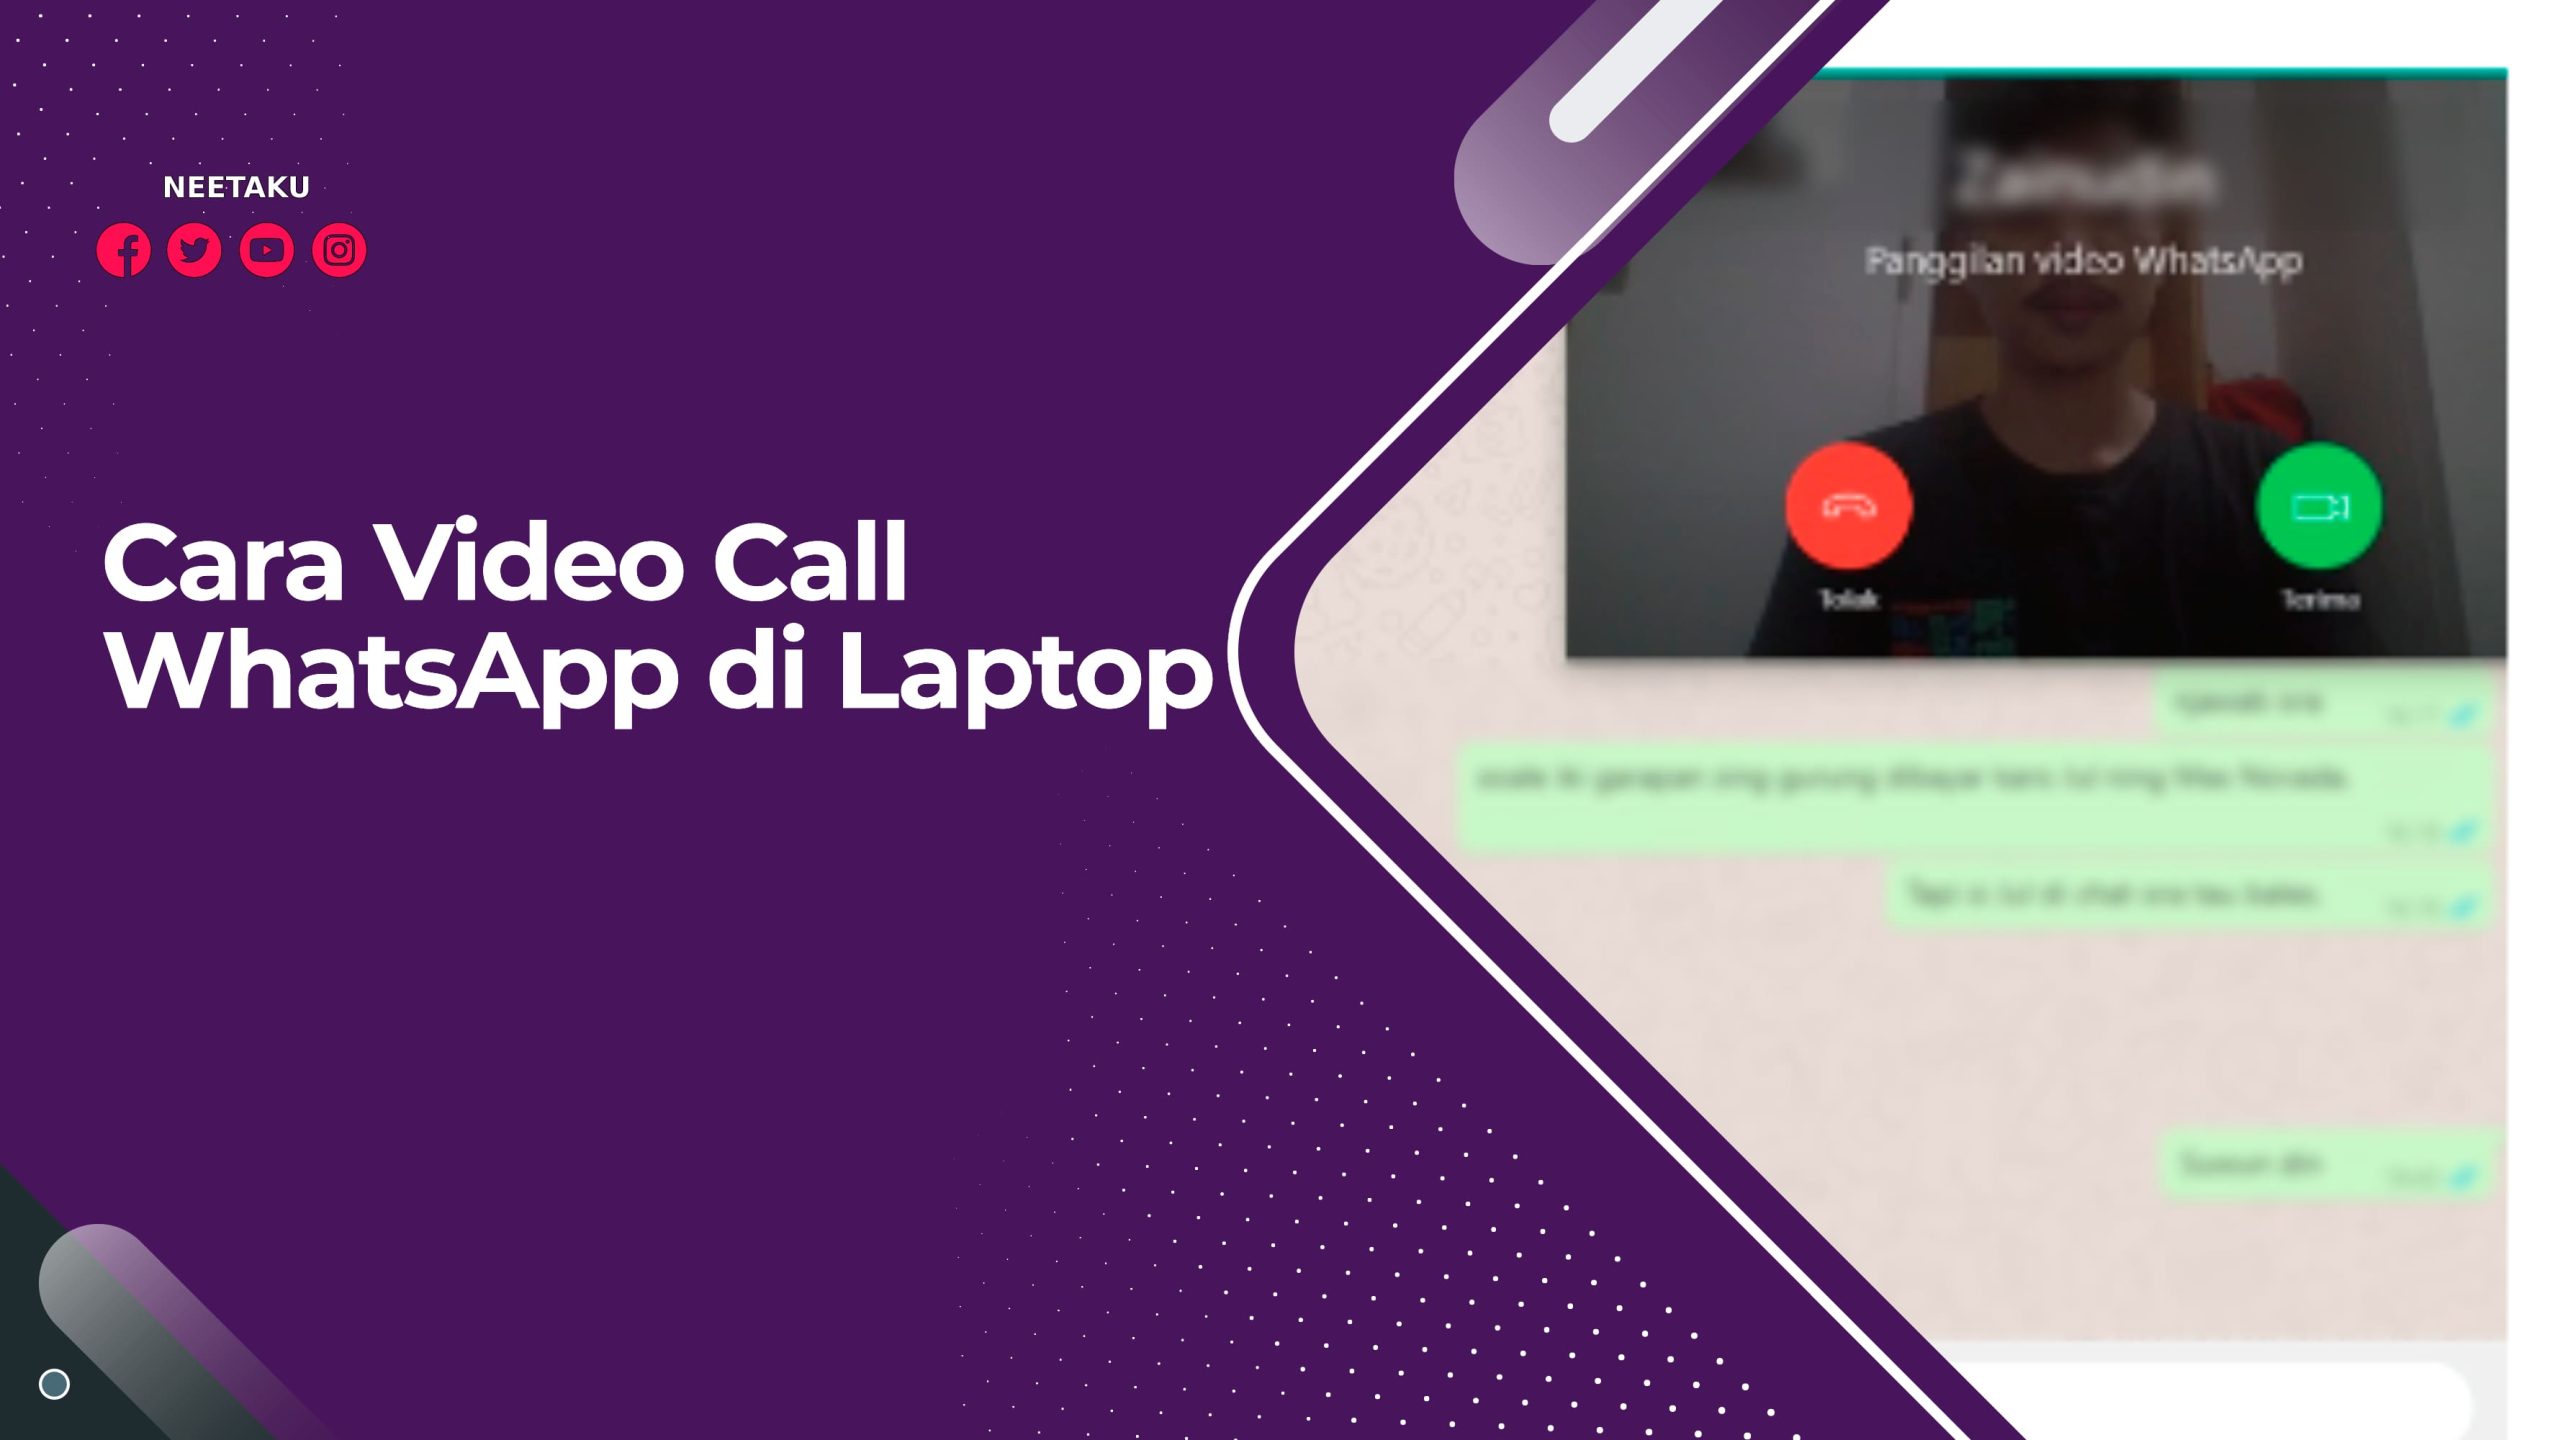 Cara Video Call WhatsApp di Laptop